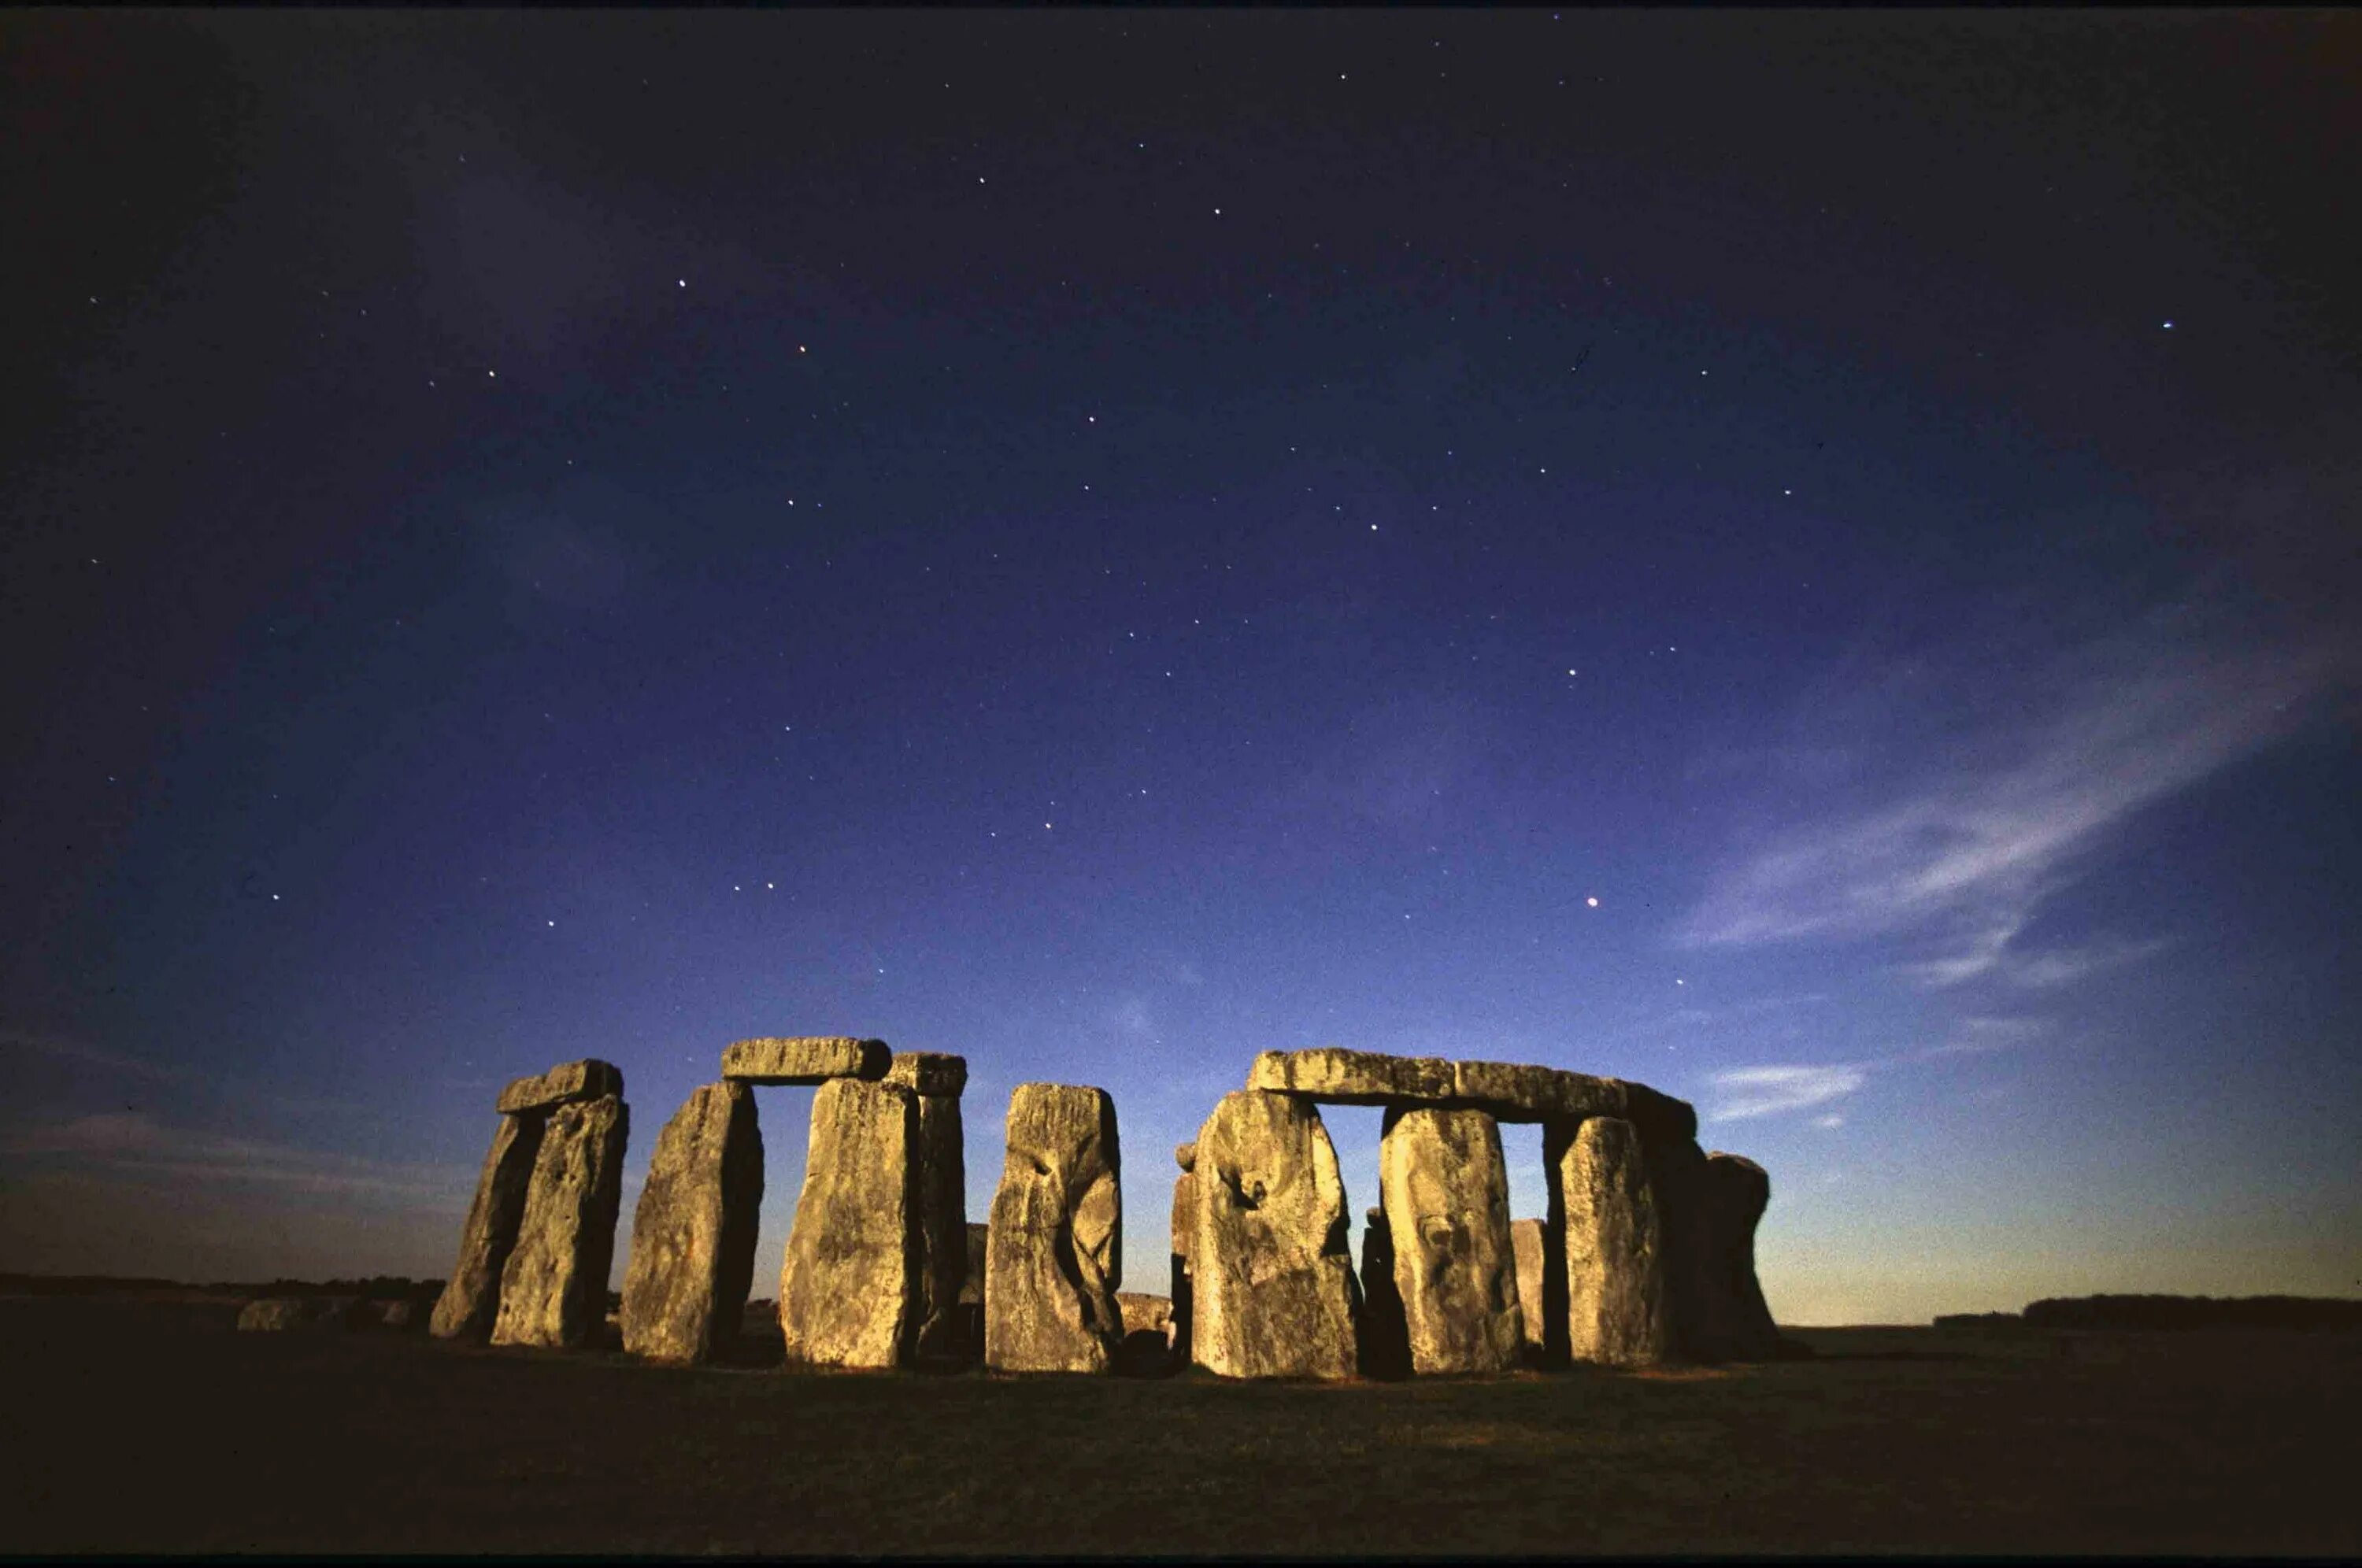 The famous stonehenge. Мегалитические сооружения Стоунхендж. Монумент Стоунхендж Англия. Древняя обсерватория Стоунхендж. Стоунхендж Англия обсерватория.